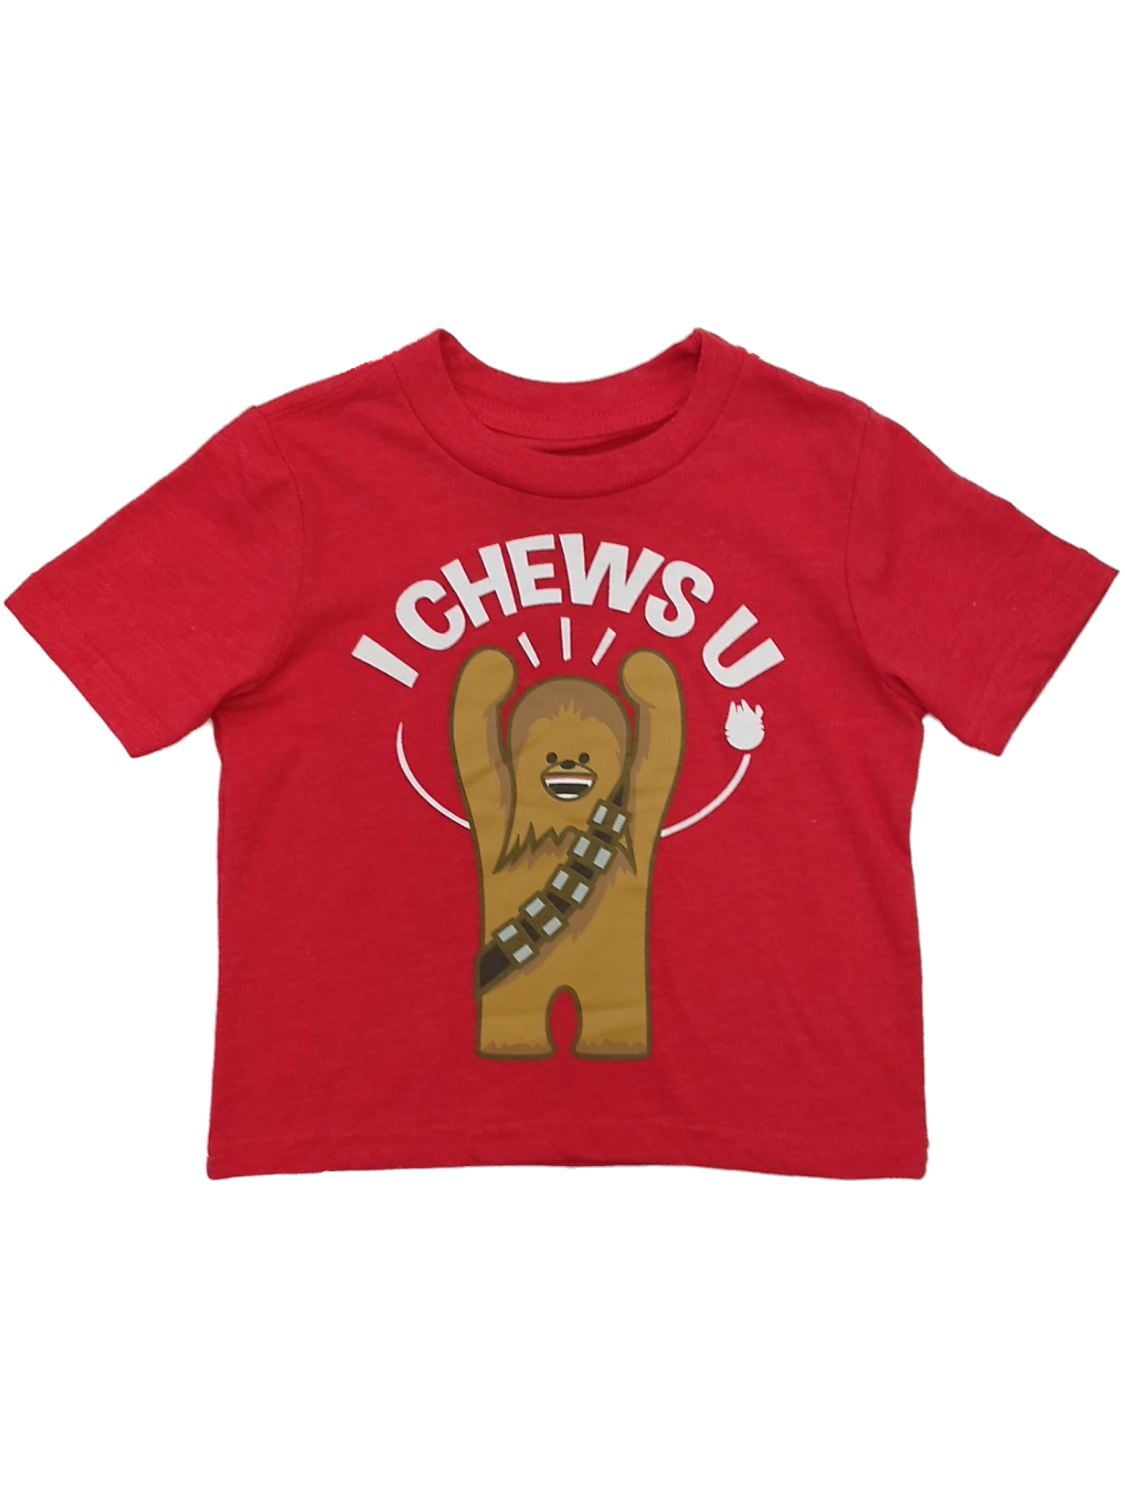 Toddler SIZE CHOICE Red Long Sleeve Shirt Star Wars Chewbaca I Chews U 